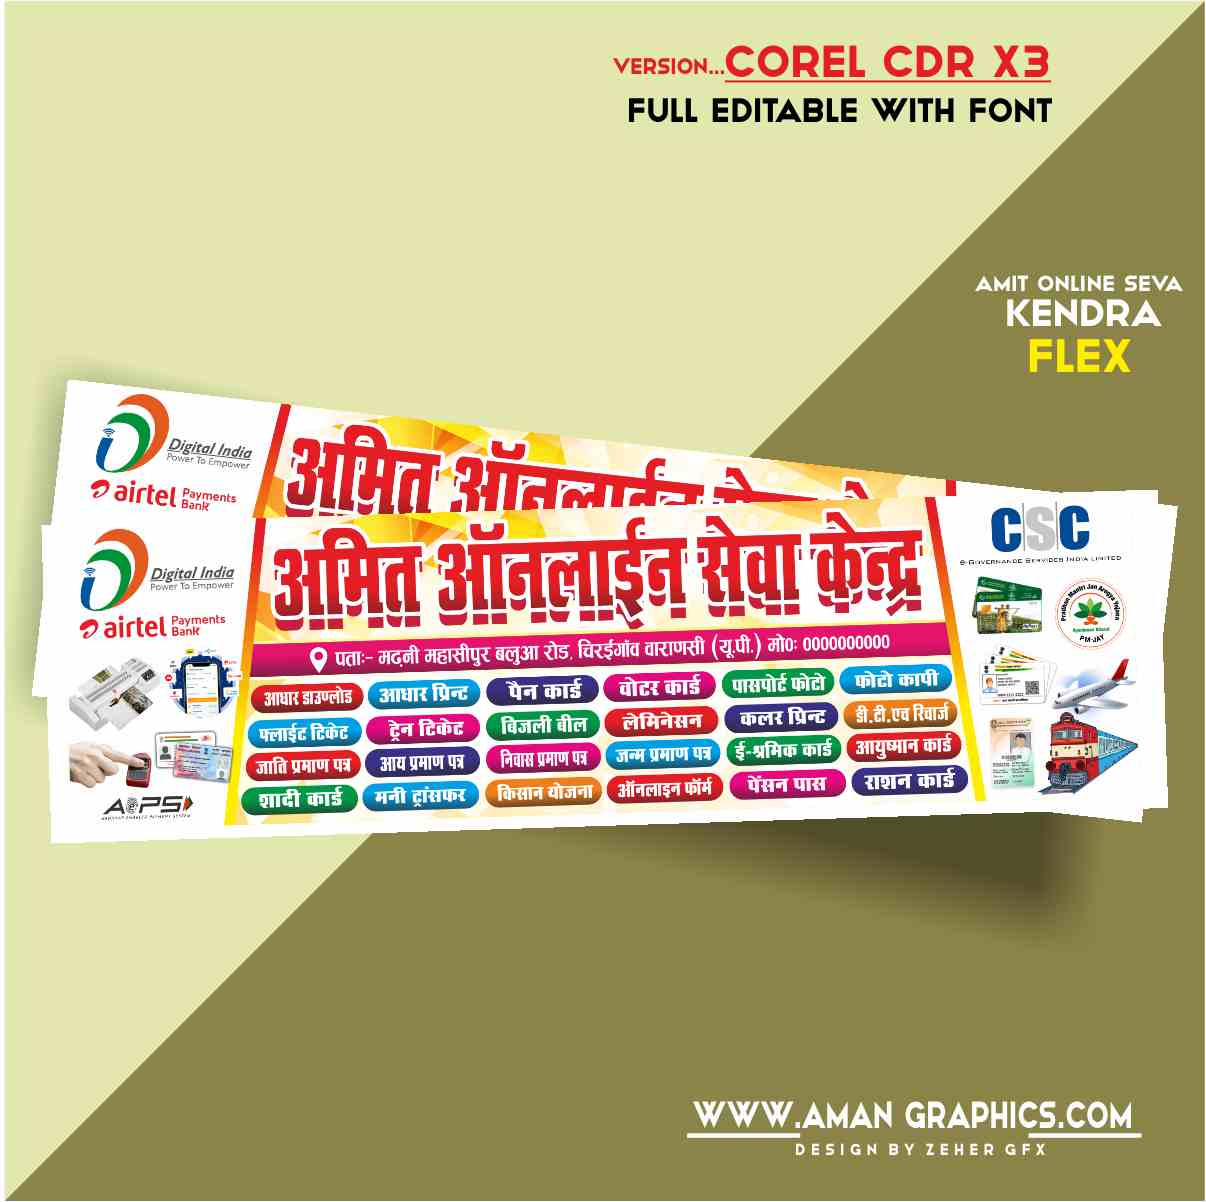 Amit Online Seva Kendra (CSC) Banner Design Cdr File FLEX BANNER FLEX